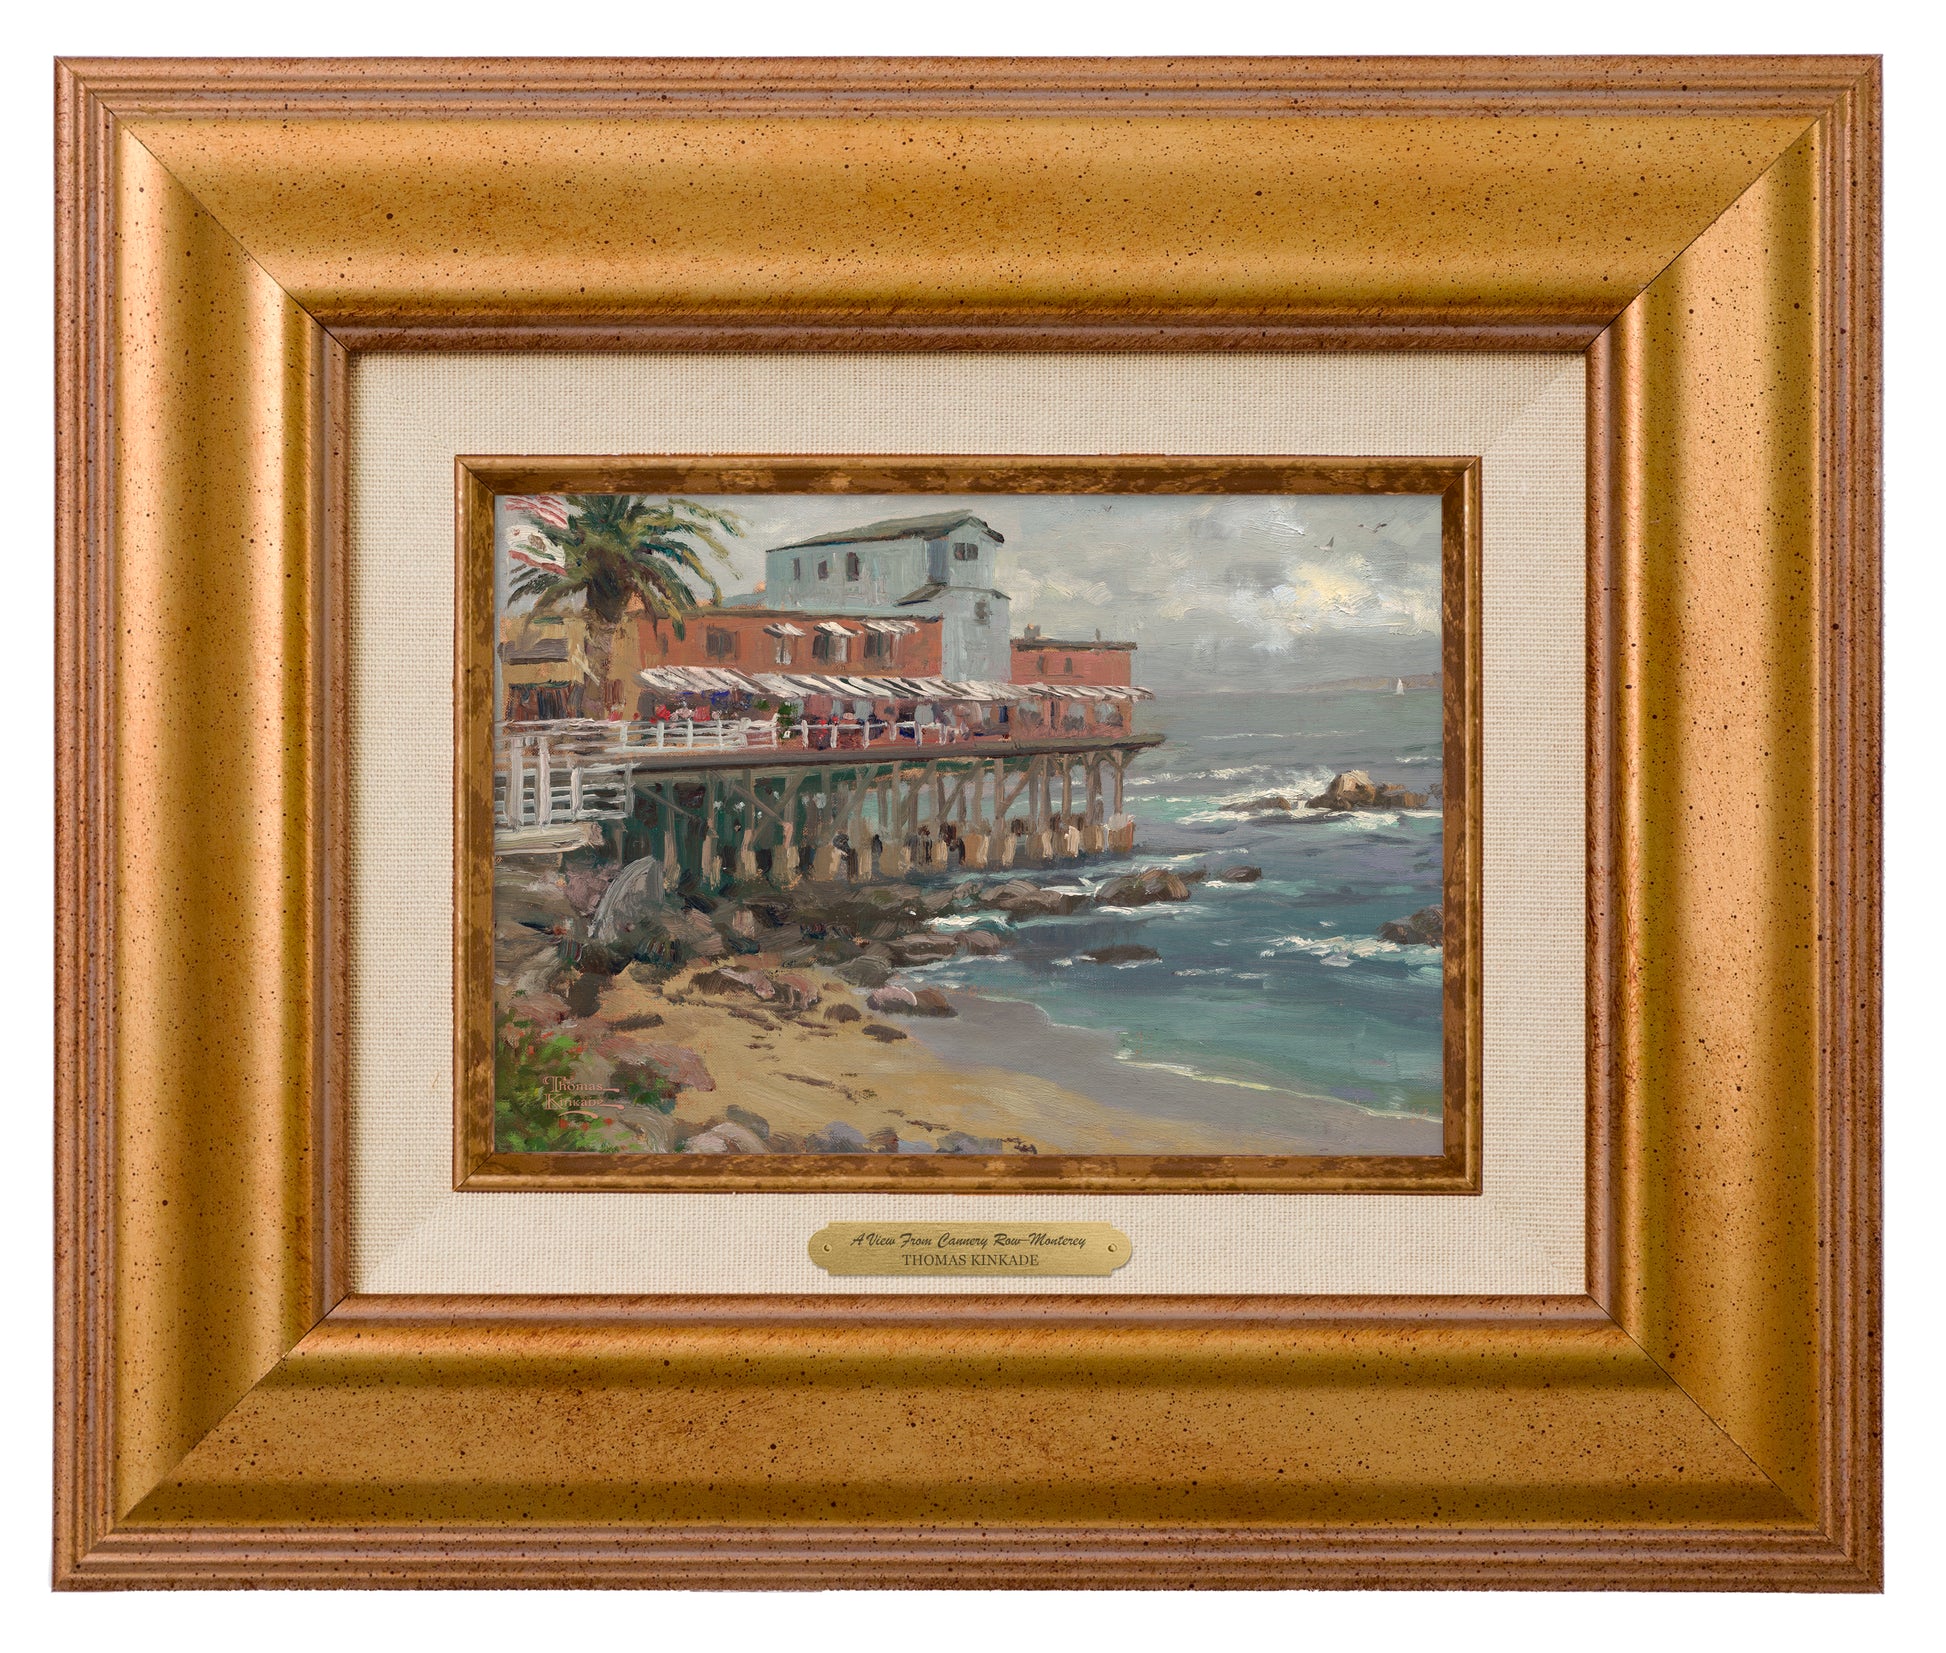 161982_BRW Cannery Row Monterey 5X7 - Golden Sunset Frame.jpg